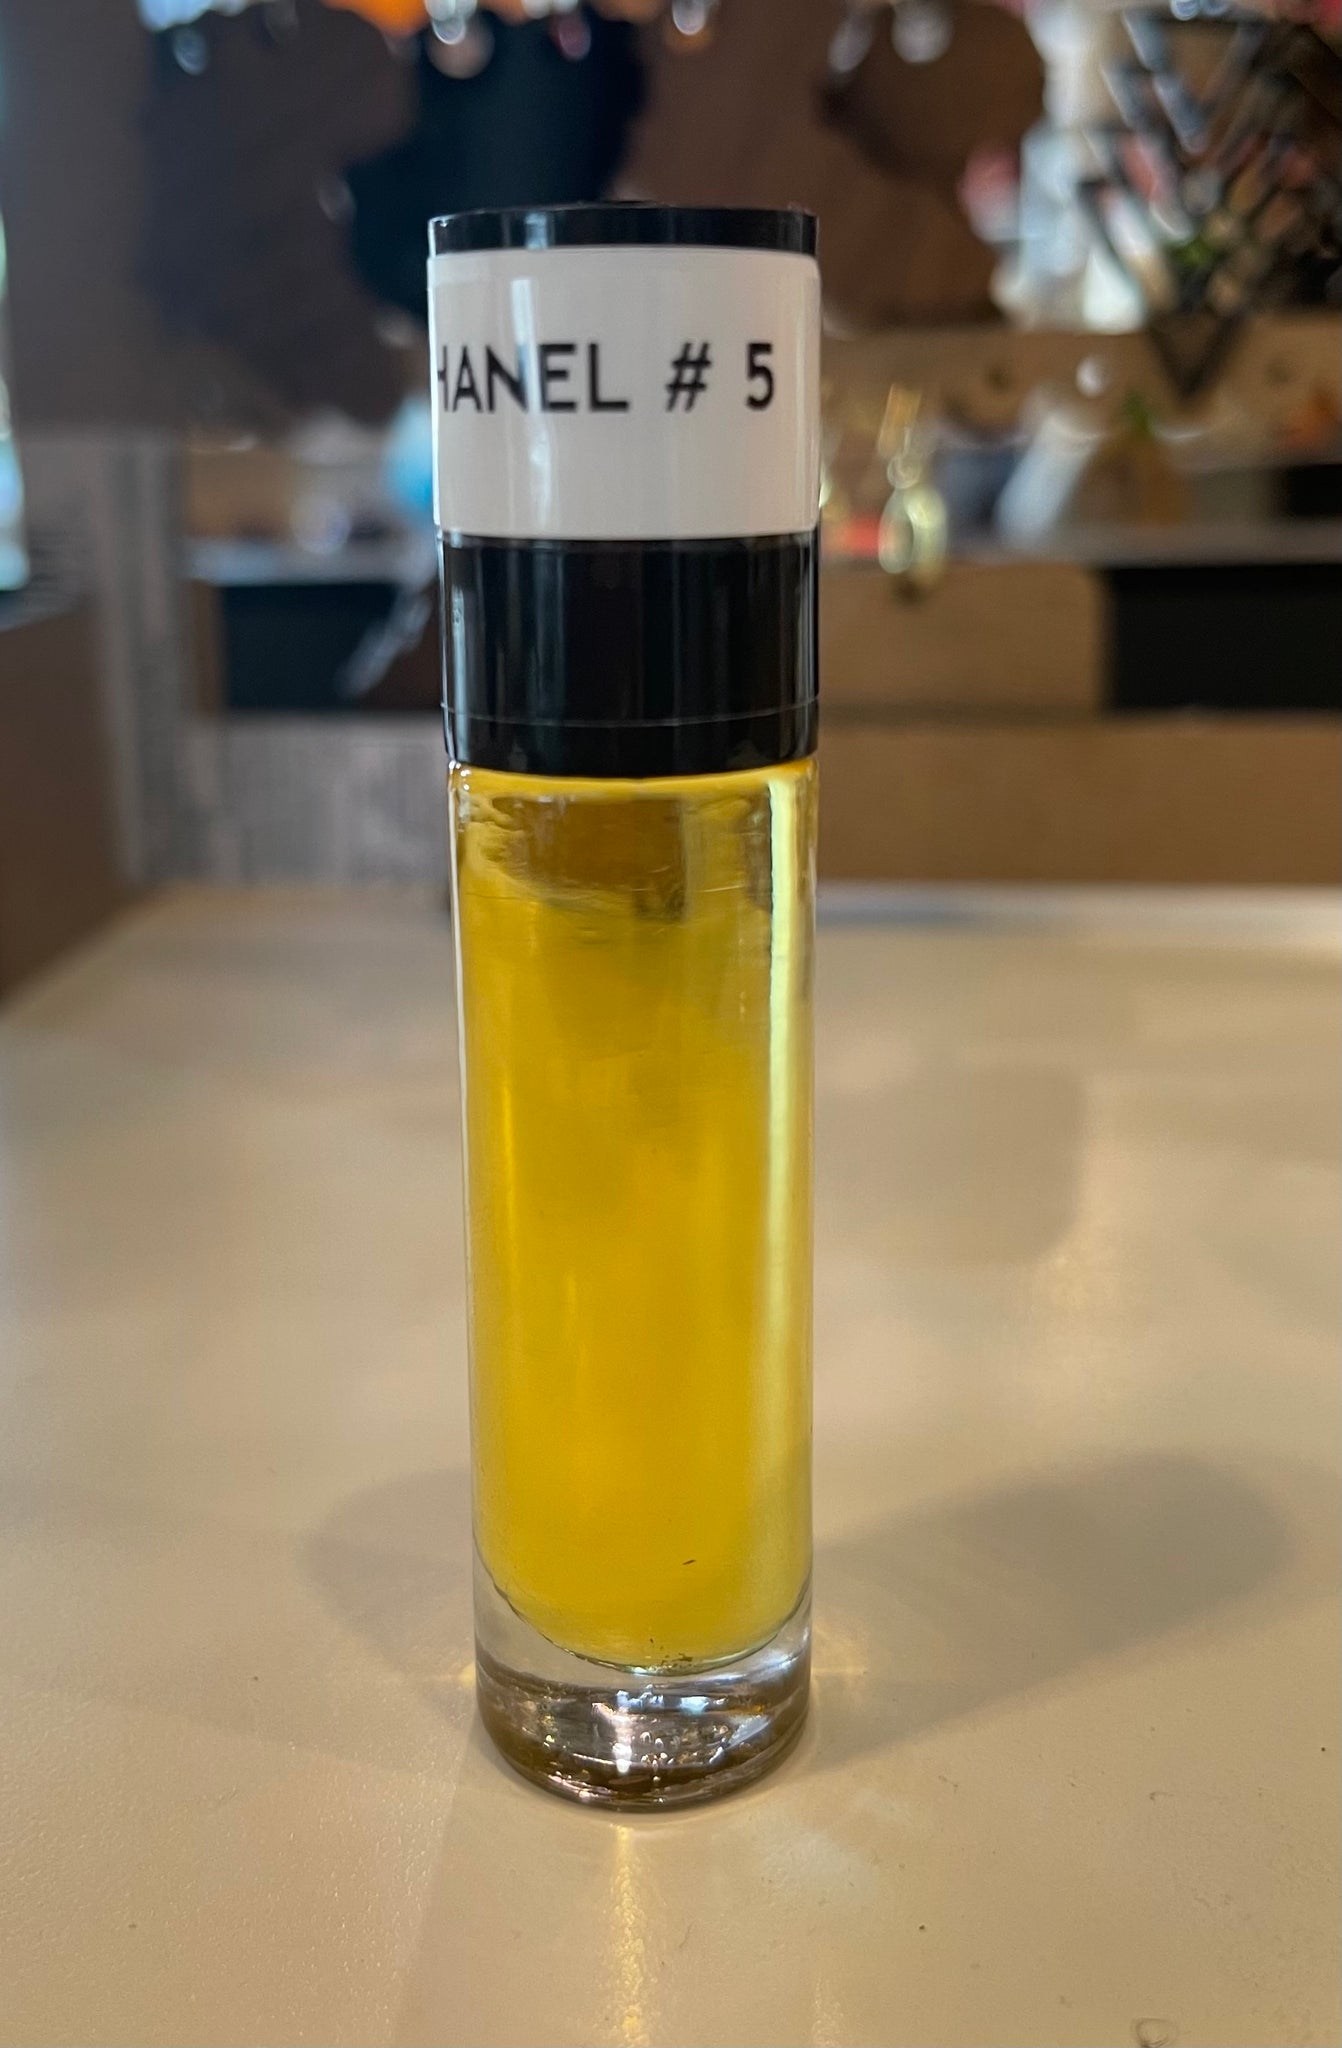 chanel oil